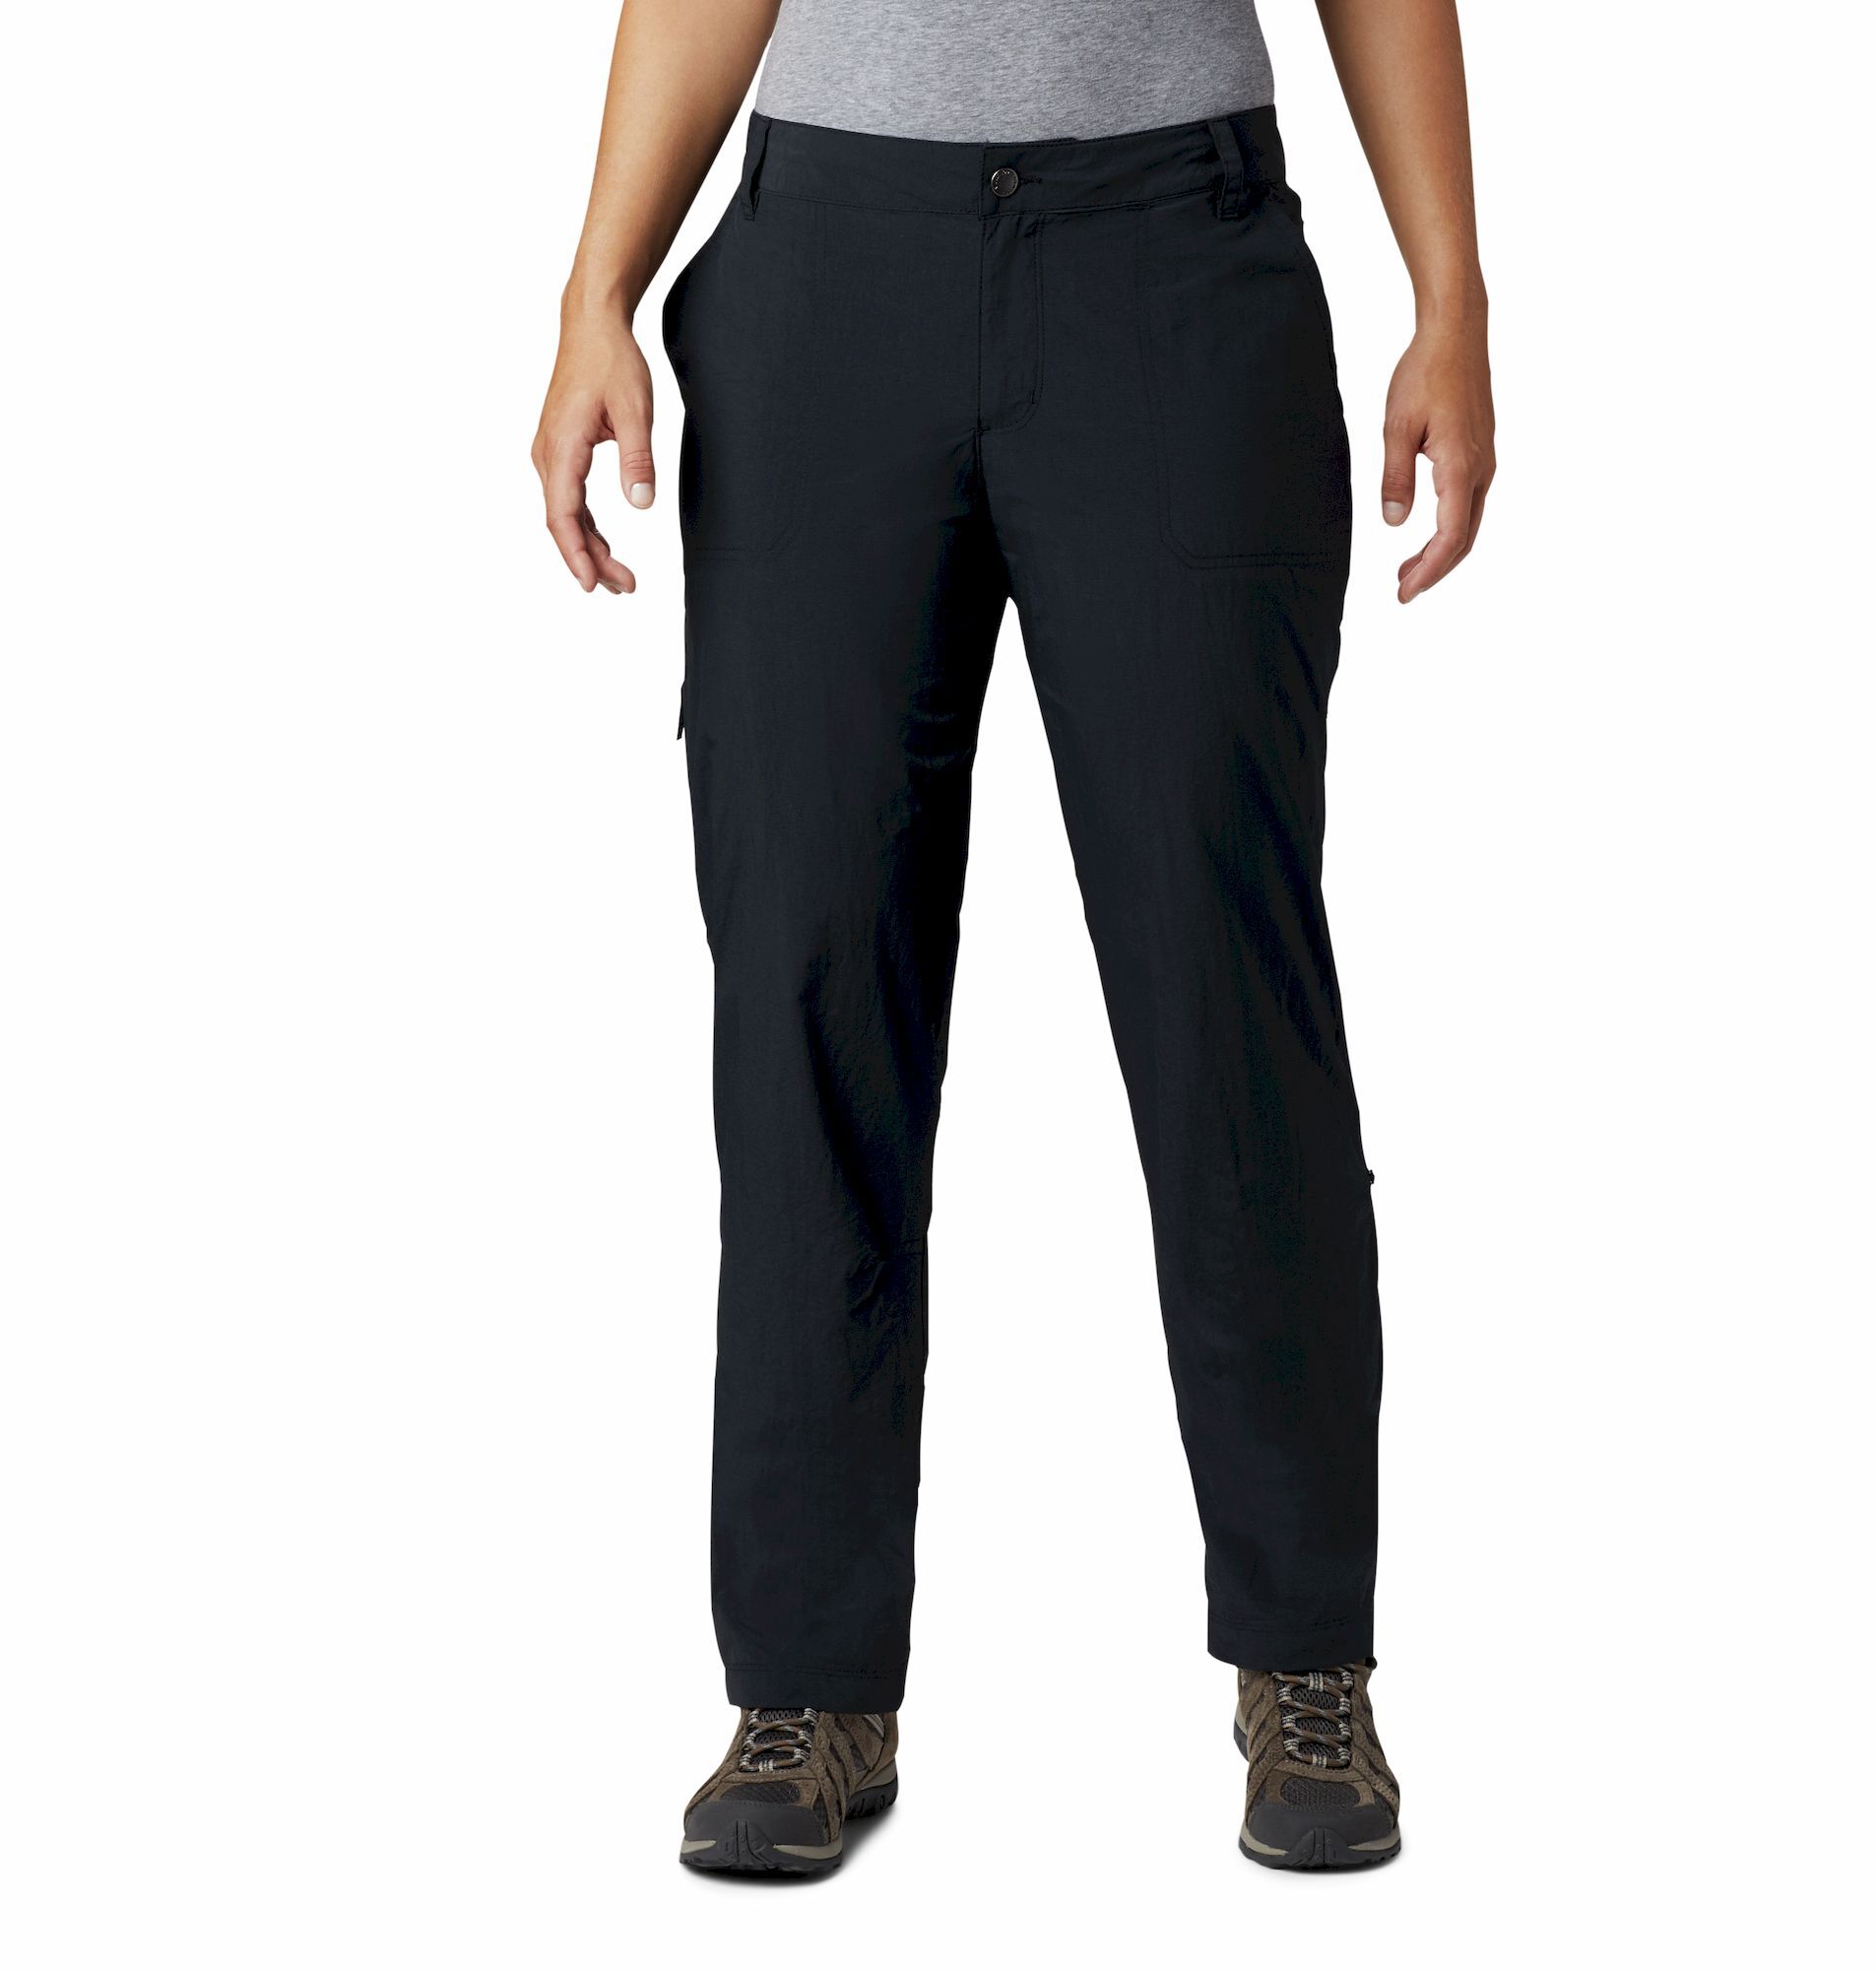 Columbia Silver Ridge 2.0 Pant - Walking trousers - Women's